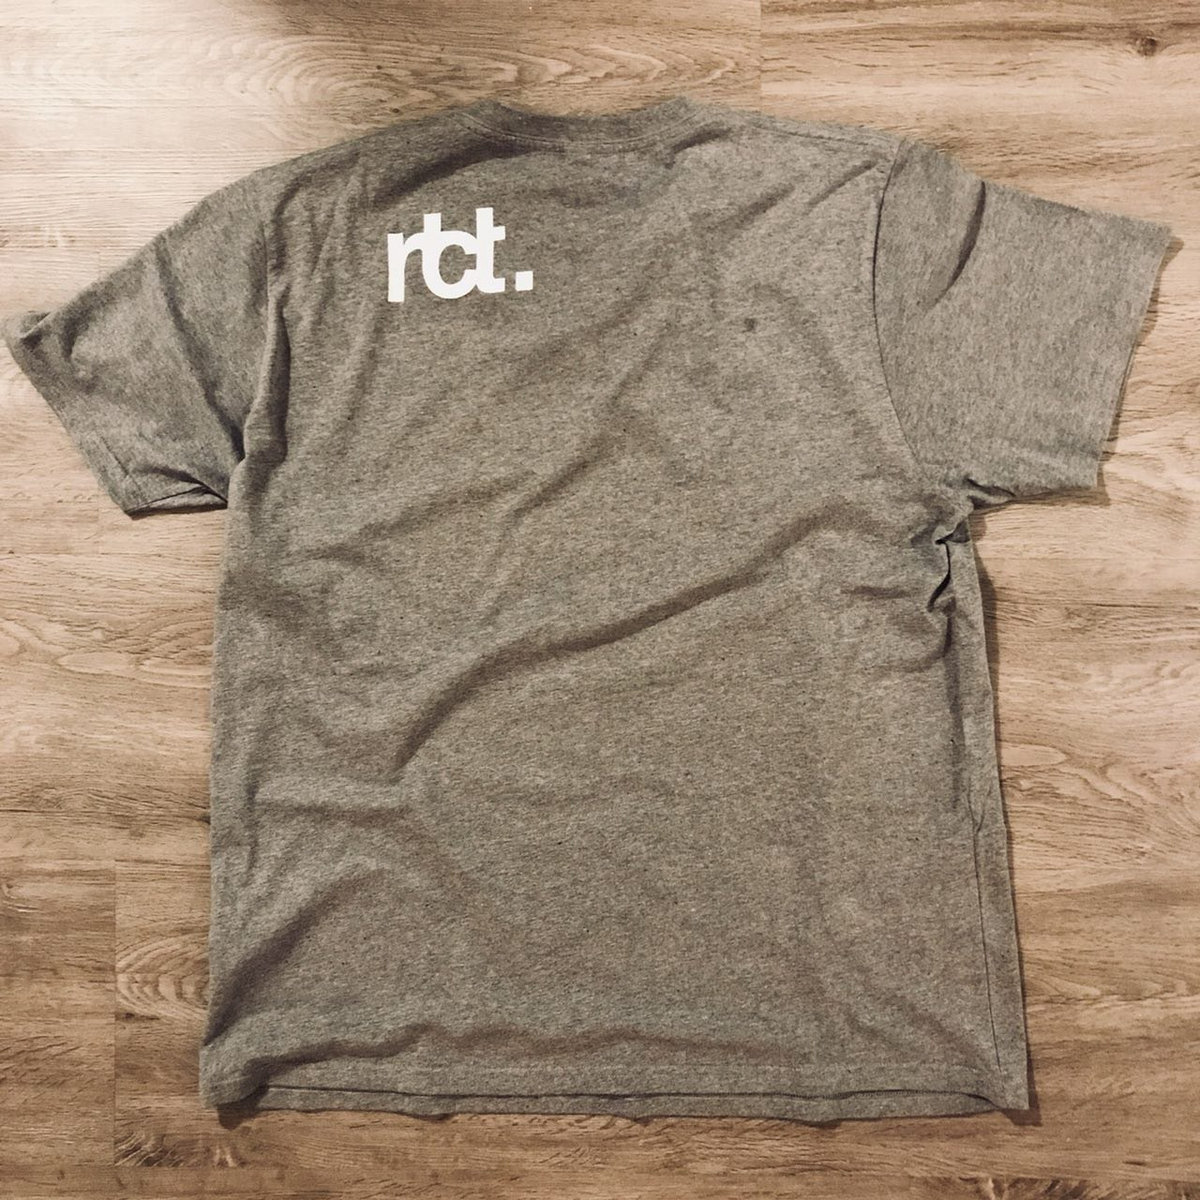 rtct. shoulder shirt | rtct.records